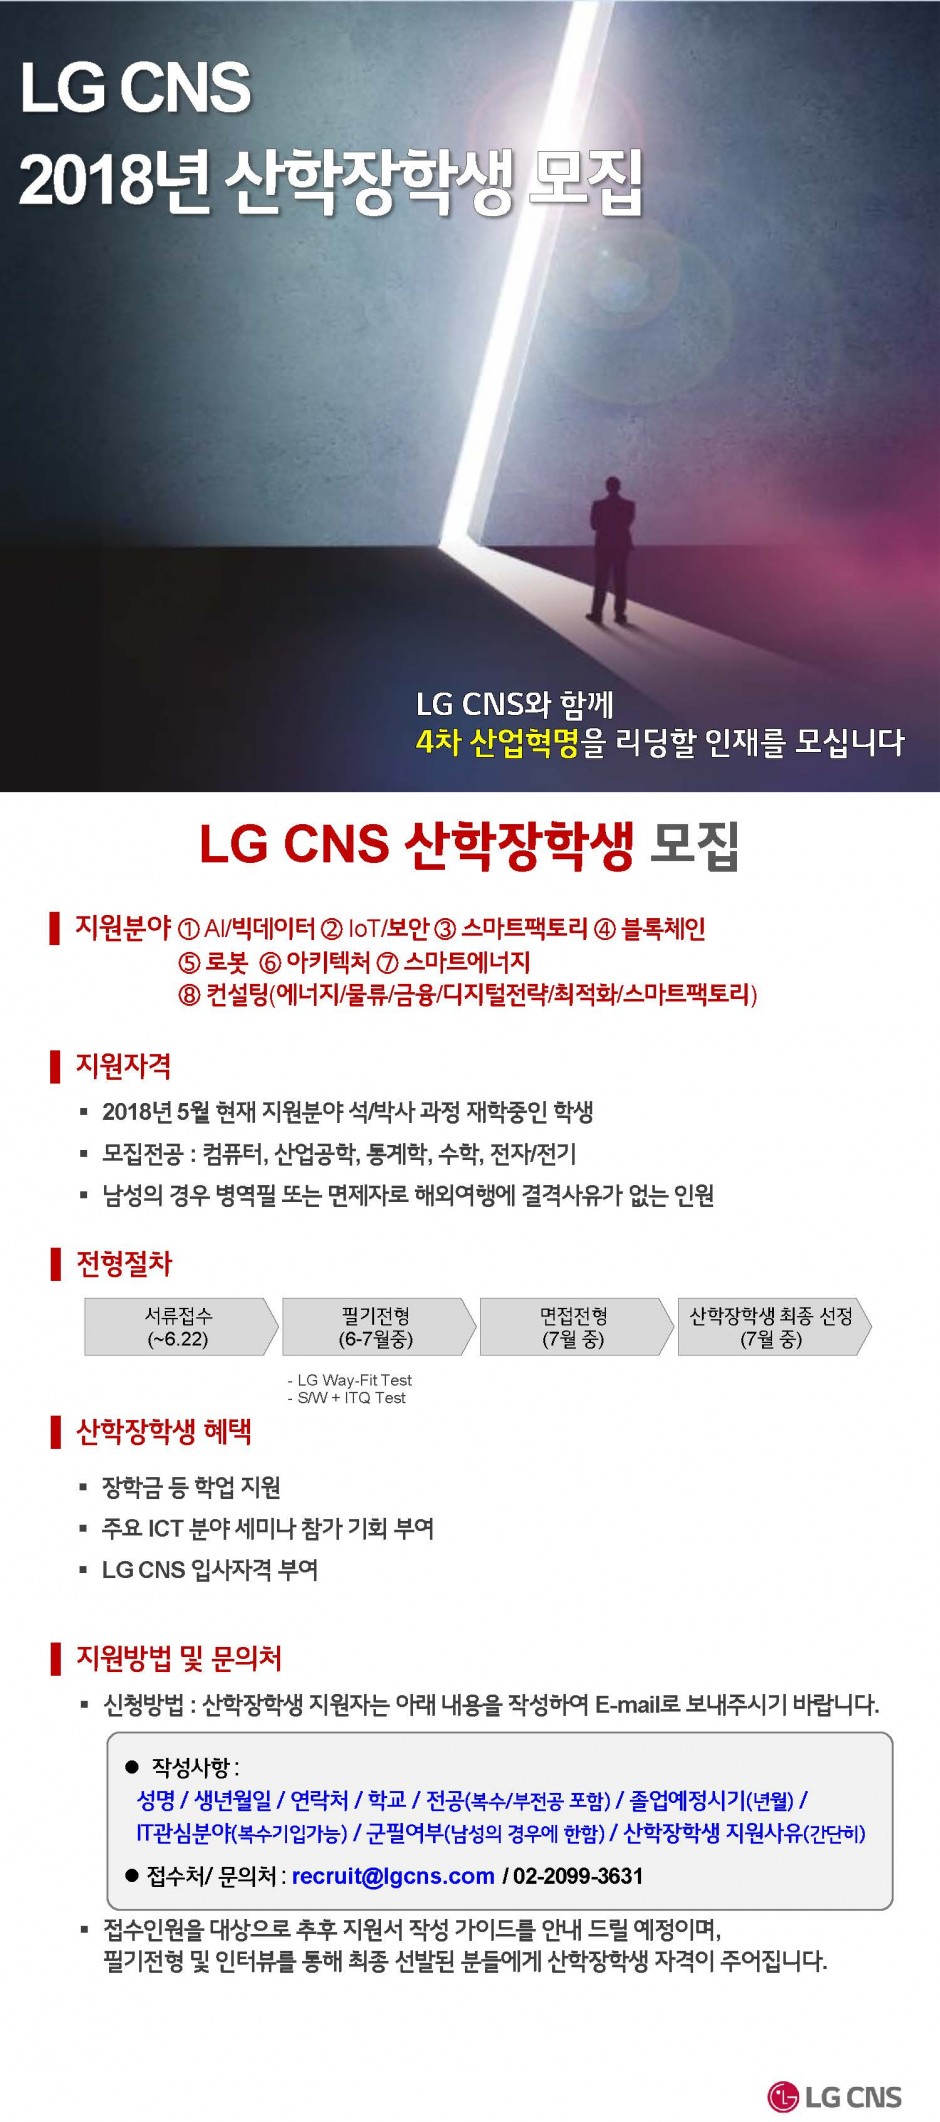 LG CNS 18년 산학장학생 모집안내_20180601